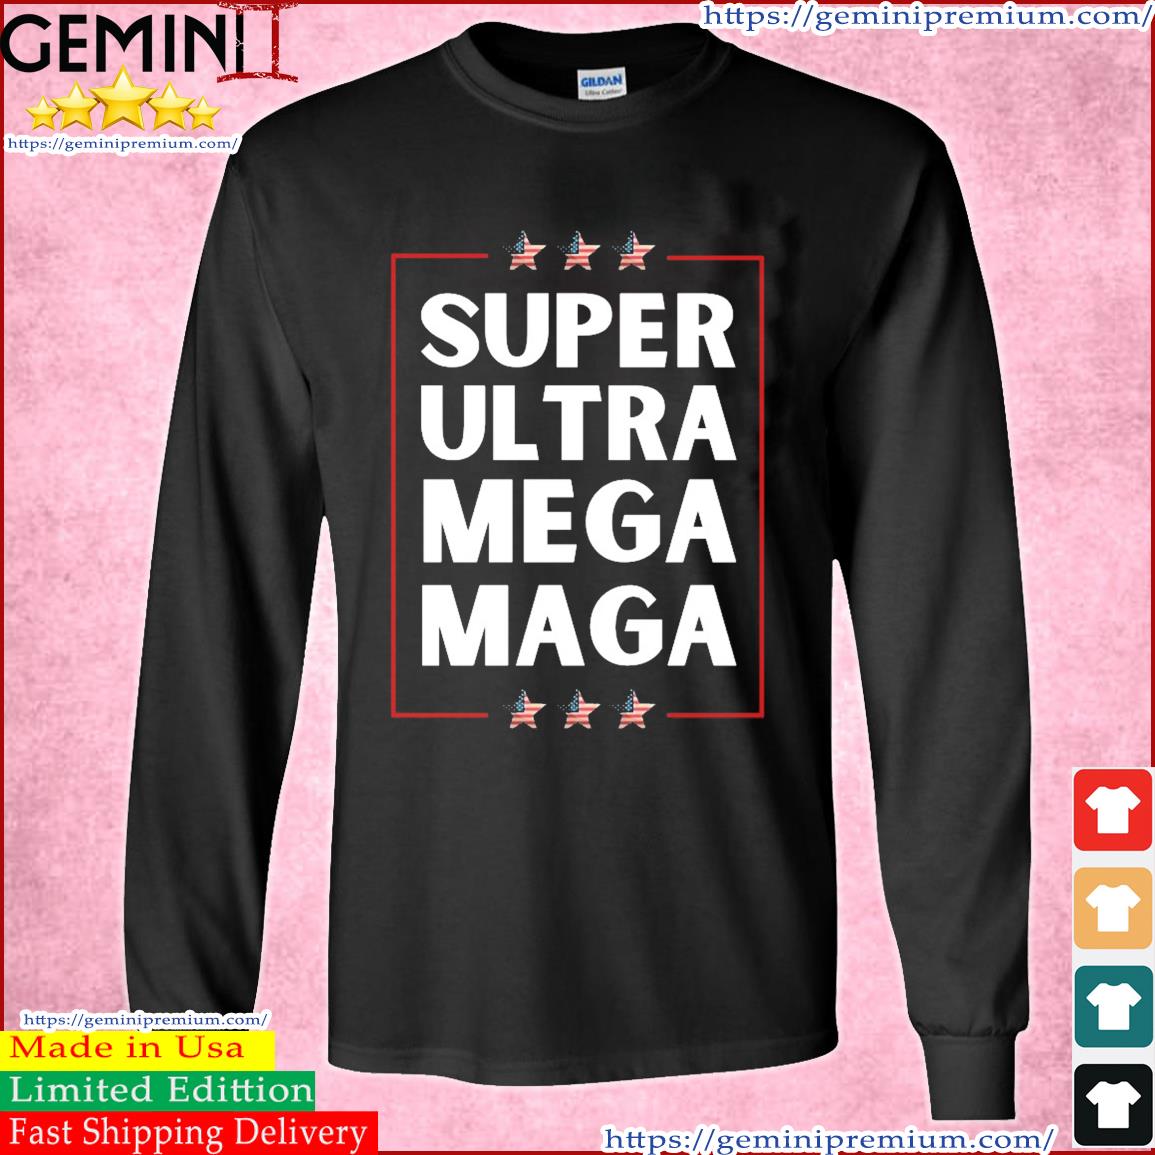 Super Ultra Mega Maga, Mega Maga, Trump Liberal Supporter Republican T-Shirt Long Sleeve Tee